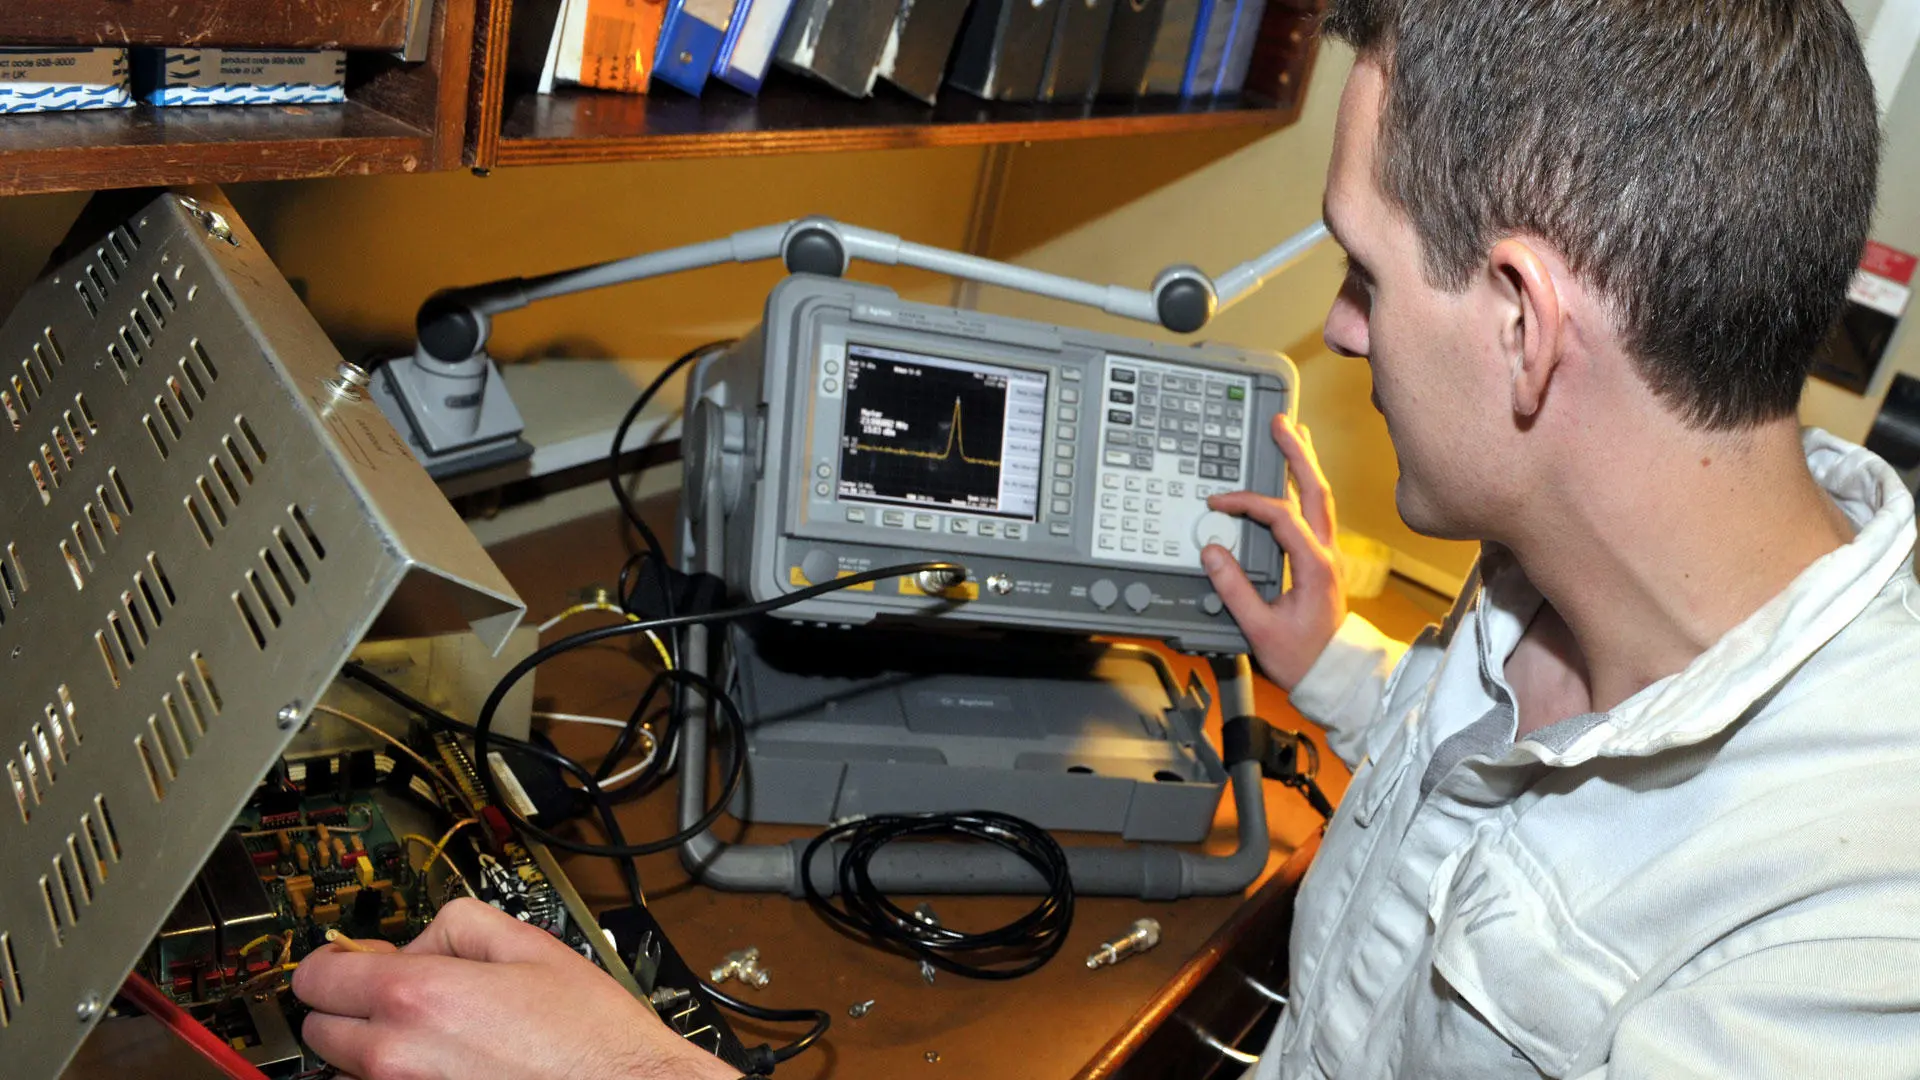 A marine electro-technical engineer working on radio equipment